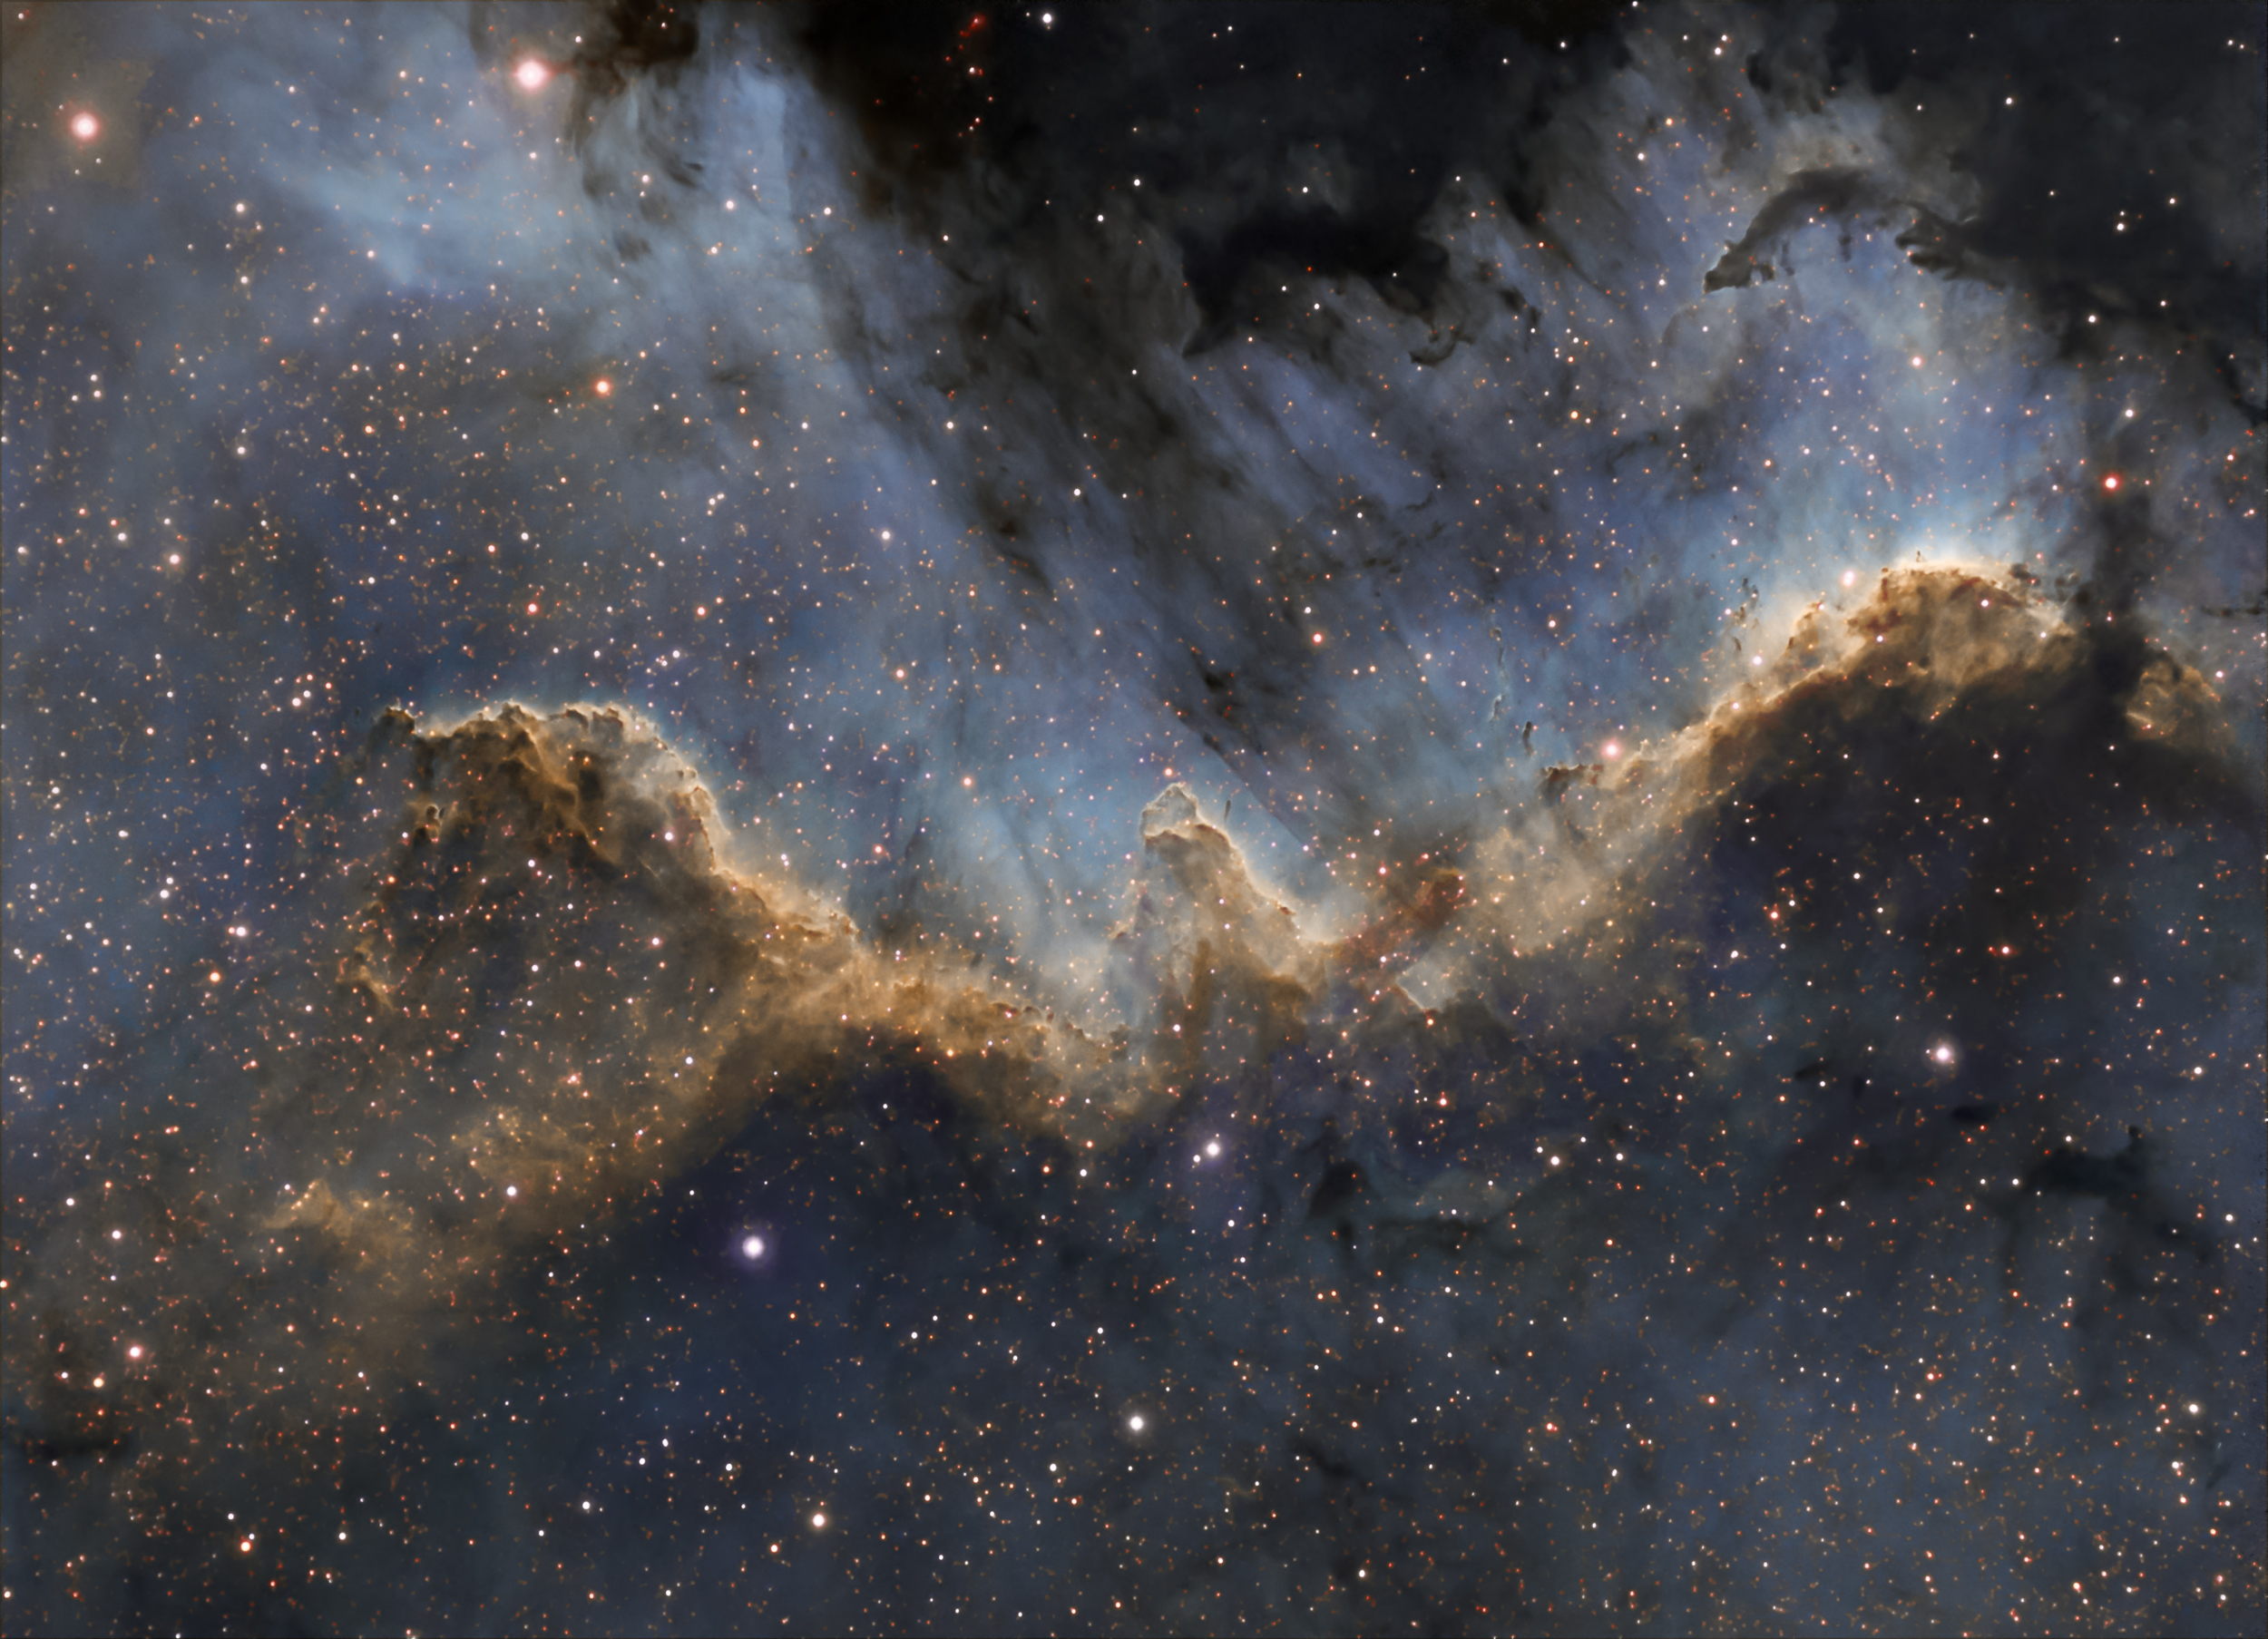 Nebulosa Norteamérica, imagen tomada por Manuel Fernández